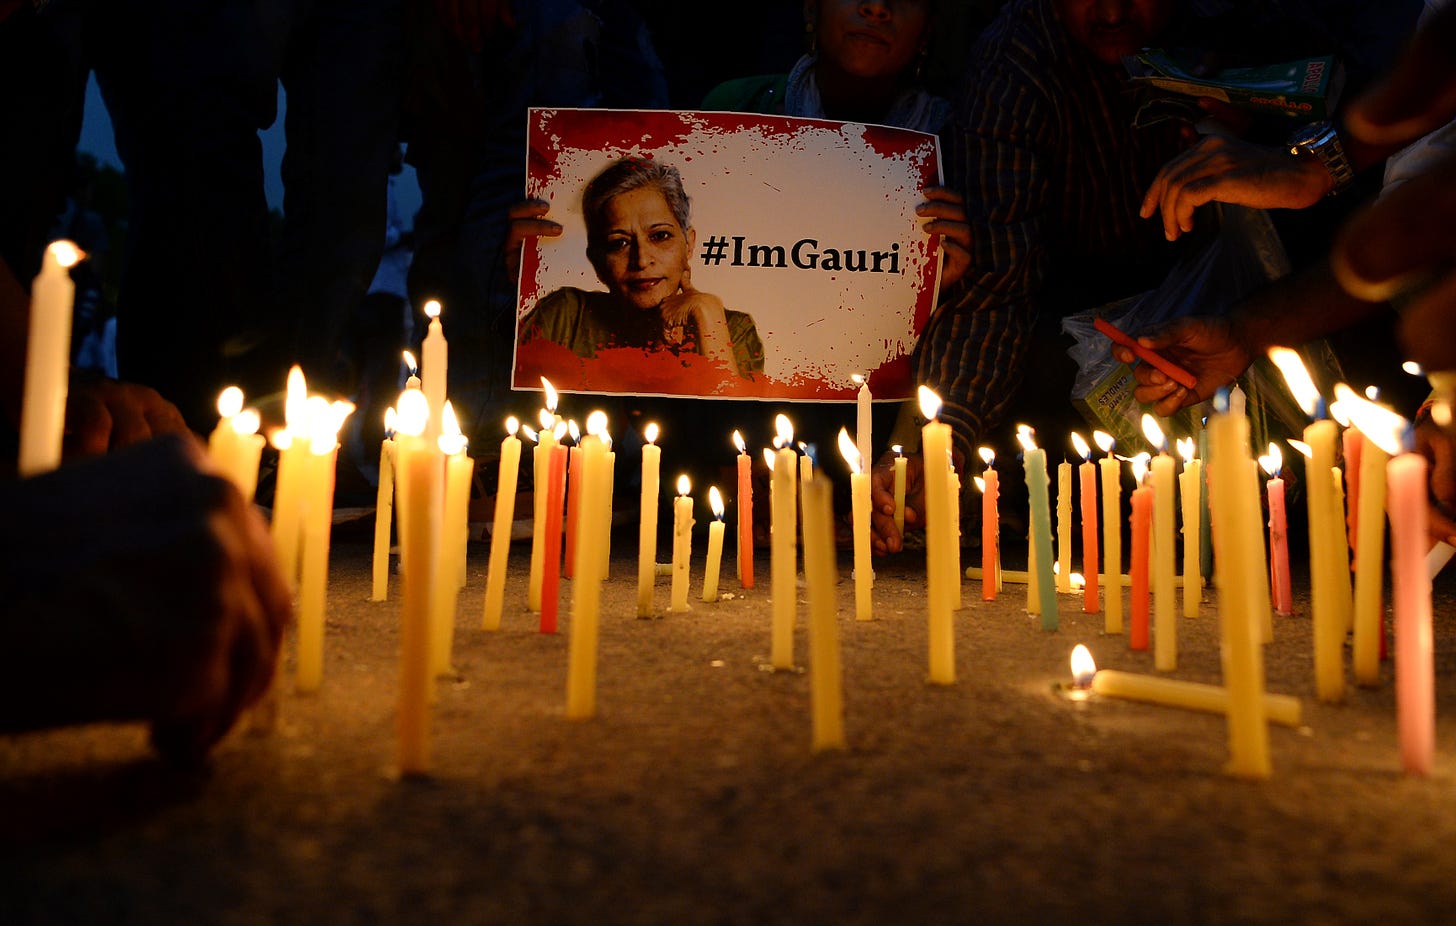 Murder of Indian journalists sparks concern over press freedom - CNN